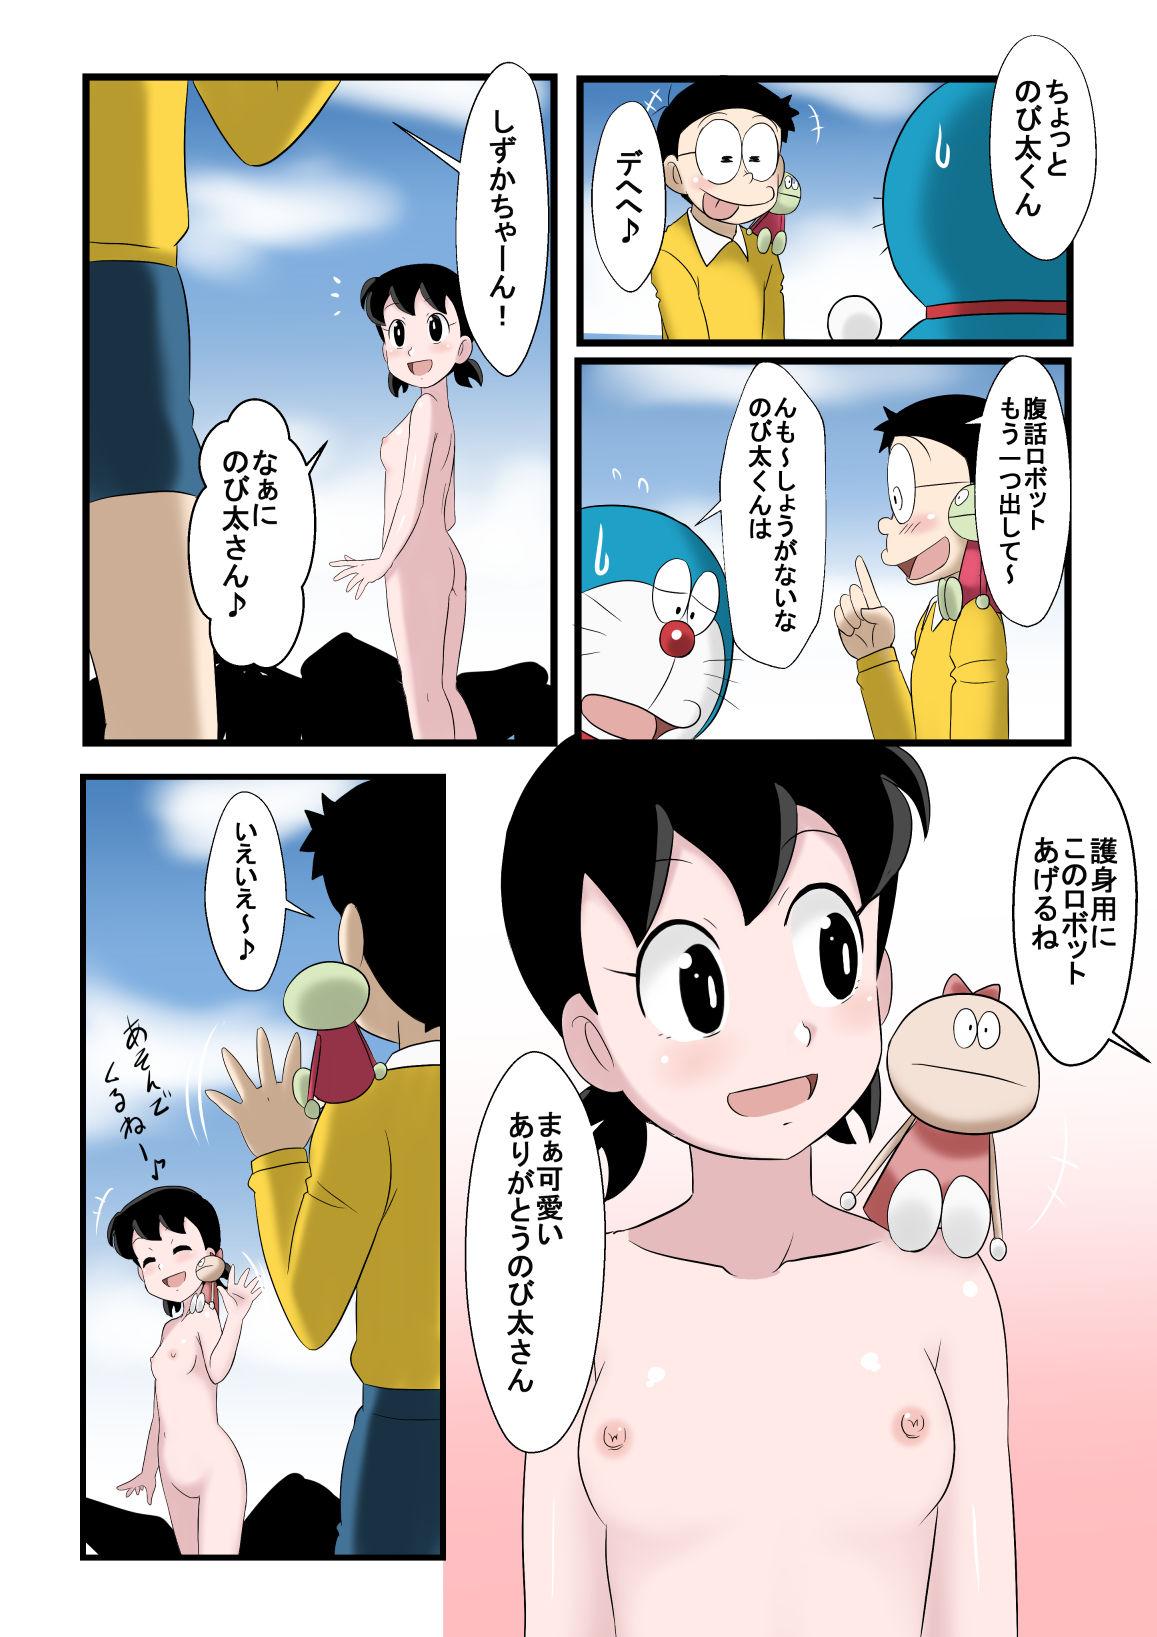 [Circle Takaya] if -sizuka- 2 (Doraemon) 3